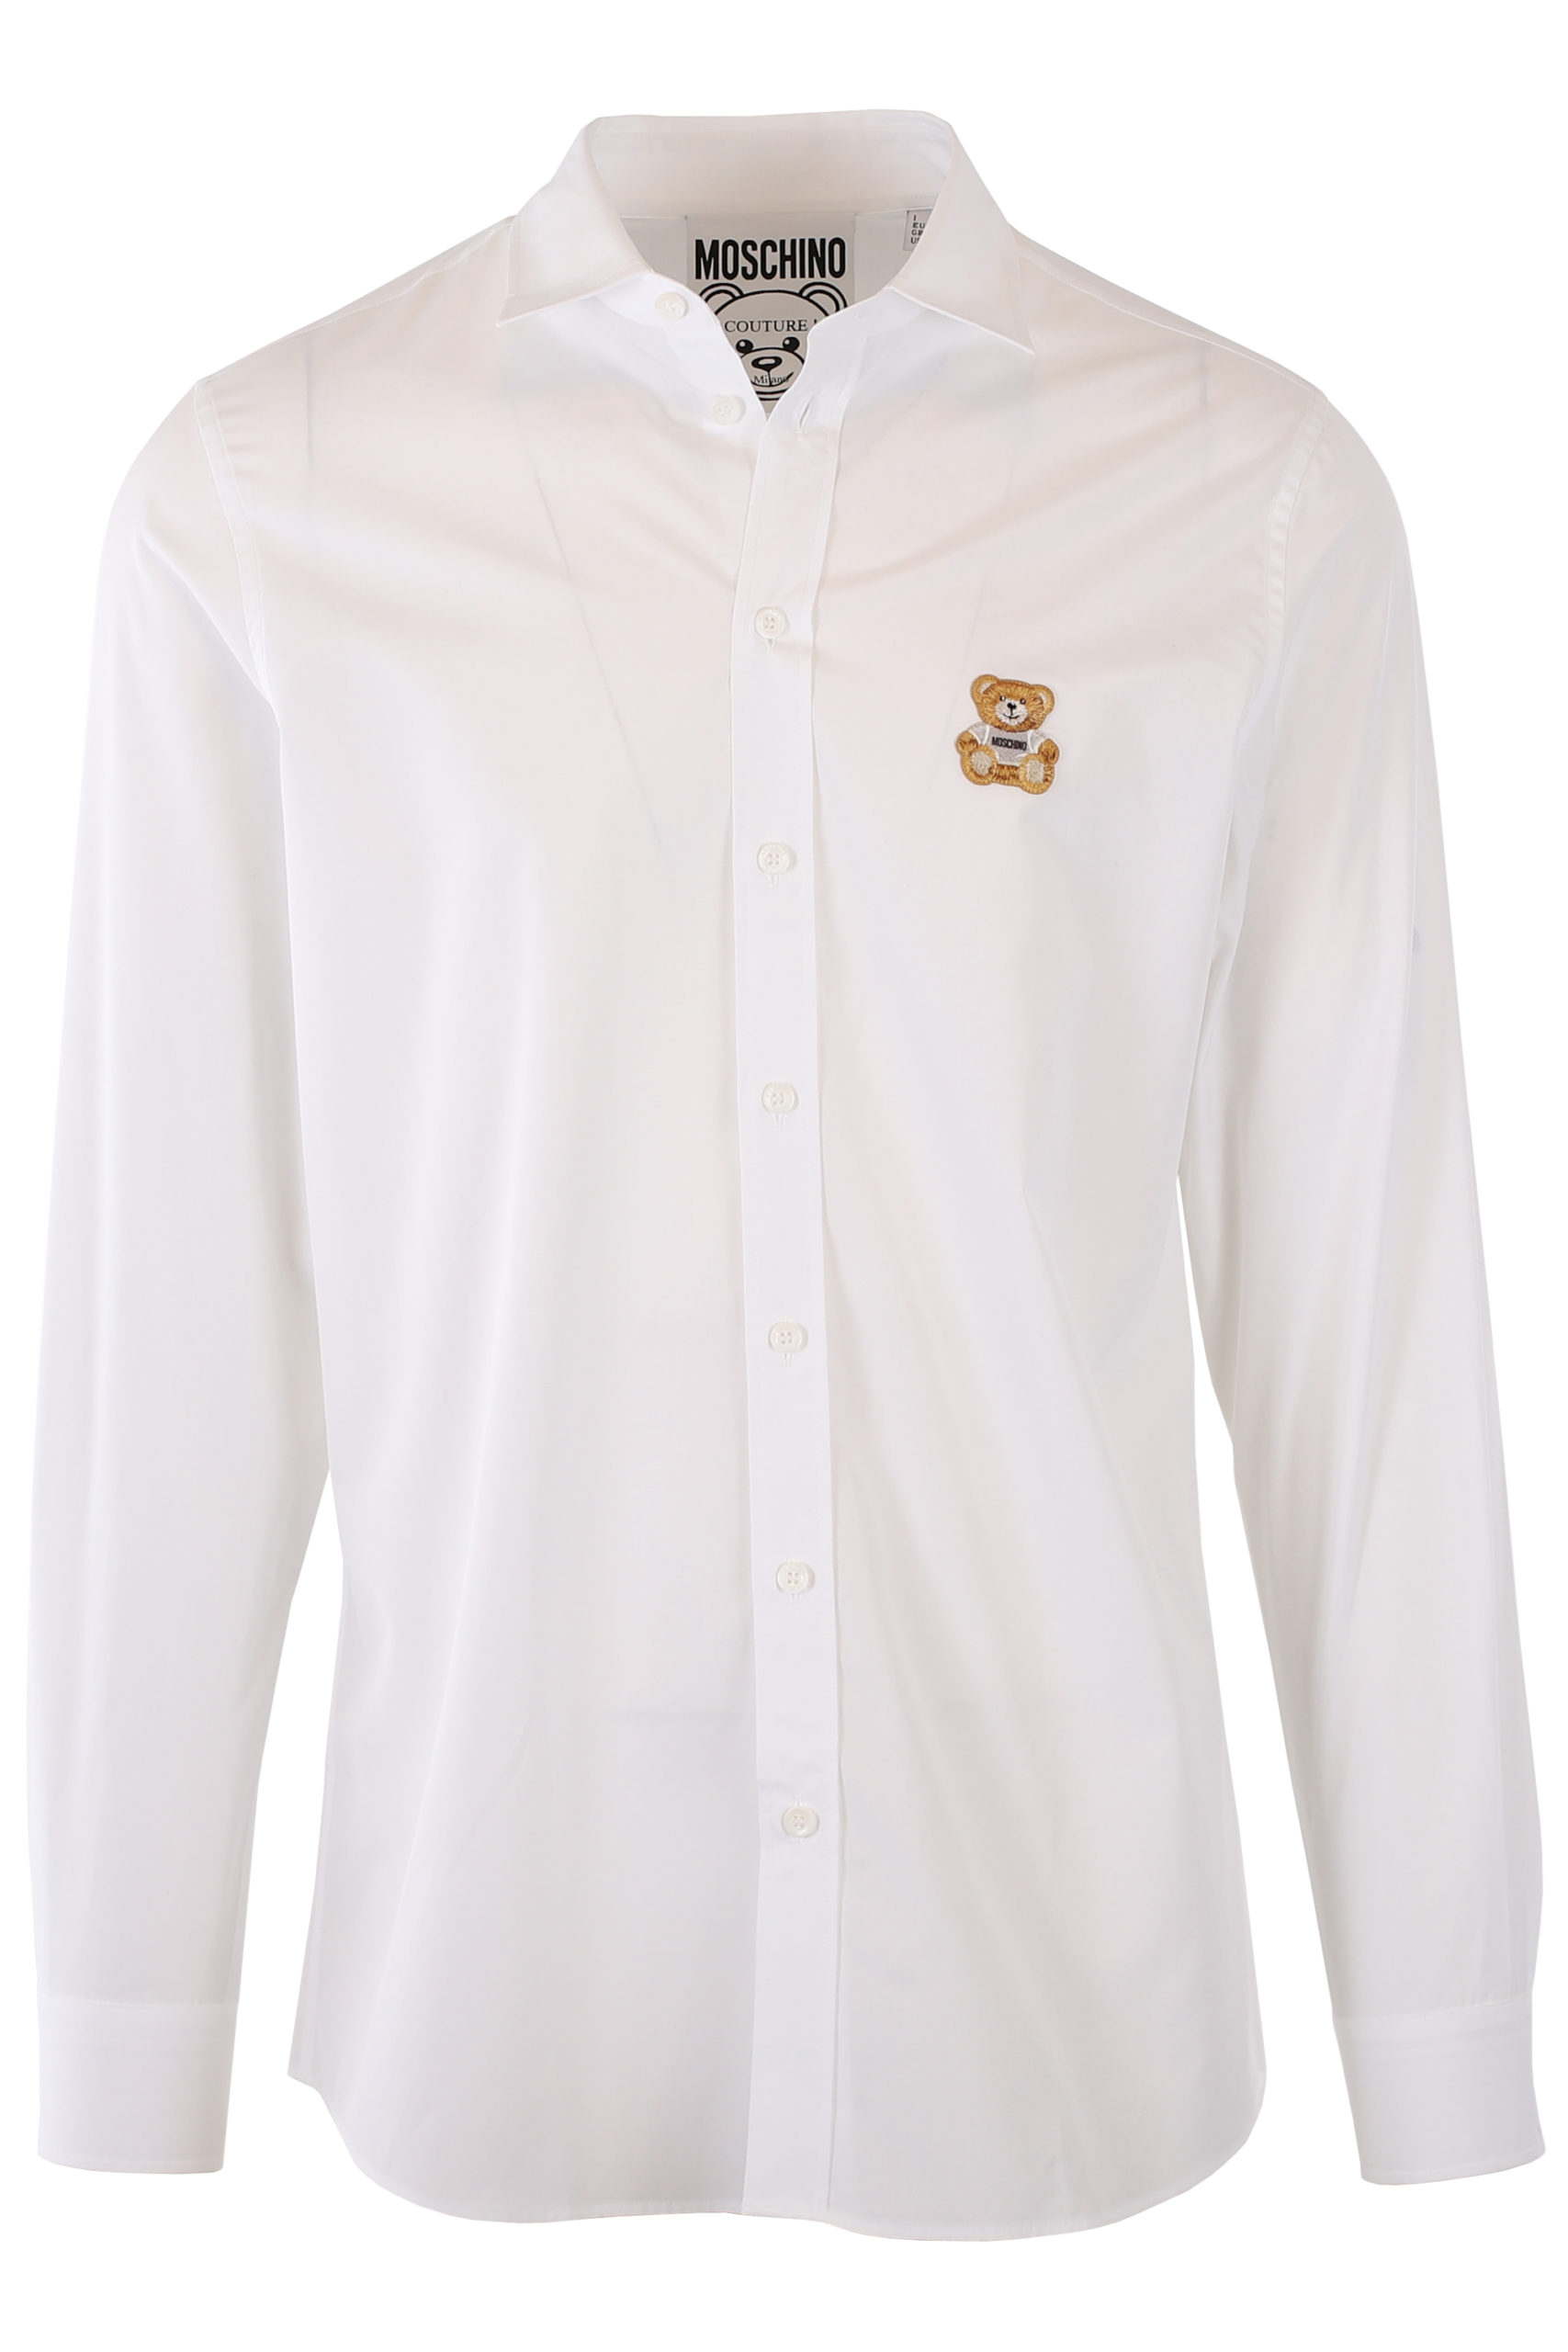 Moschino - Camisa blanca con logo oso - BLS Fashion